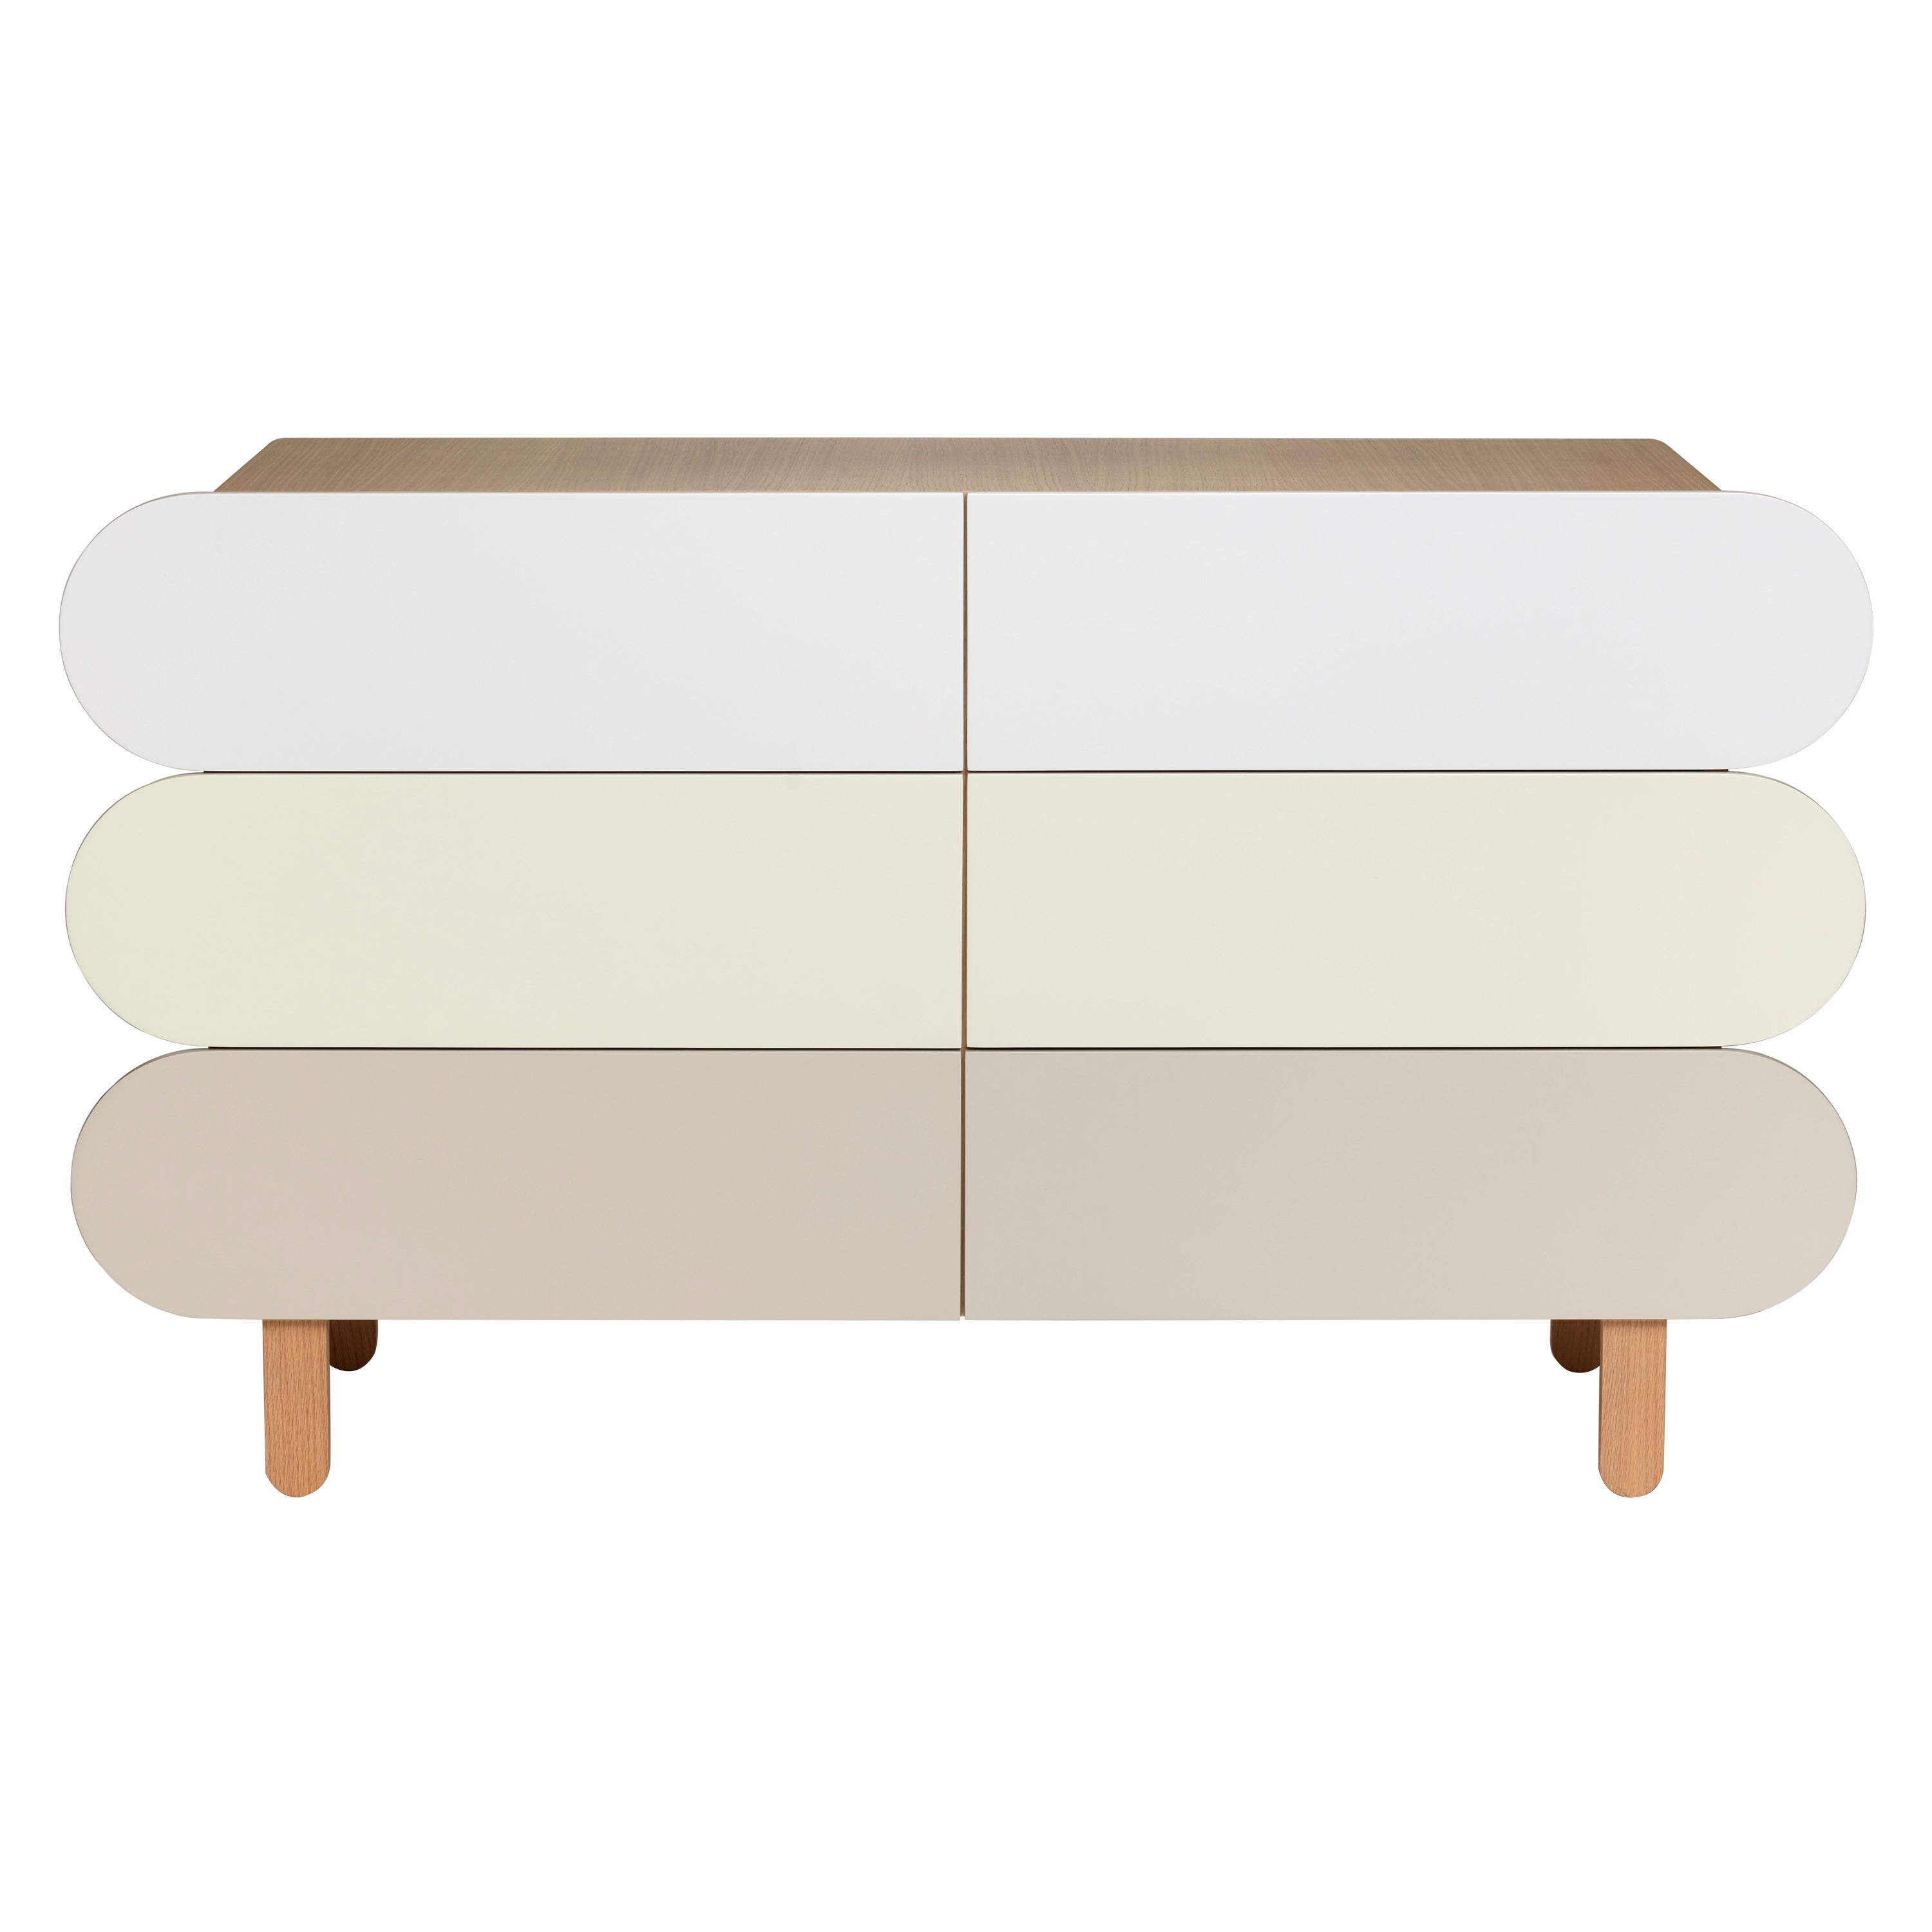 Minimalist Mid-Century Modern Dresser In Neutral Color For Sale